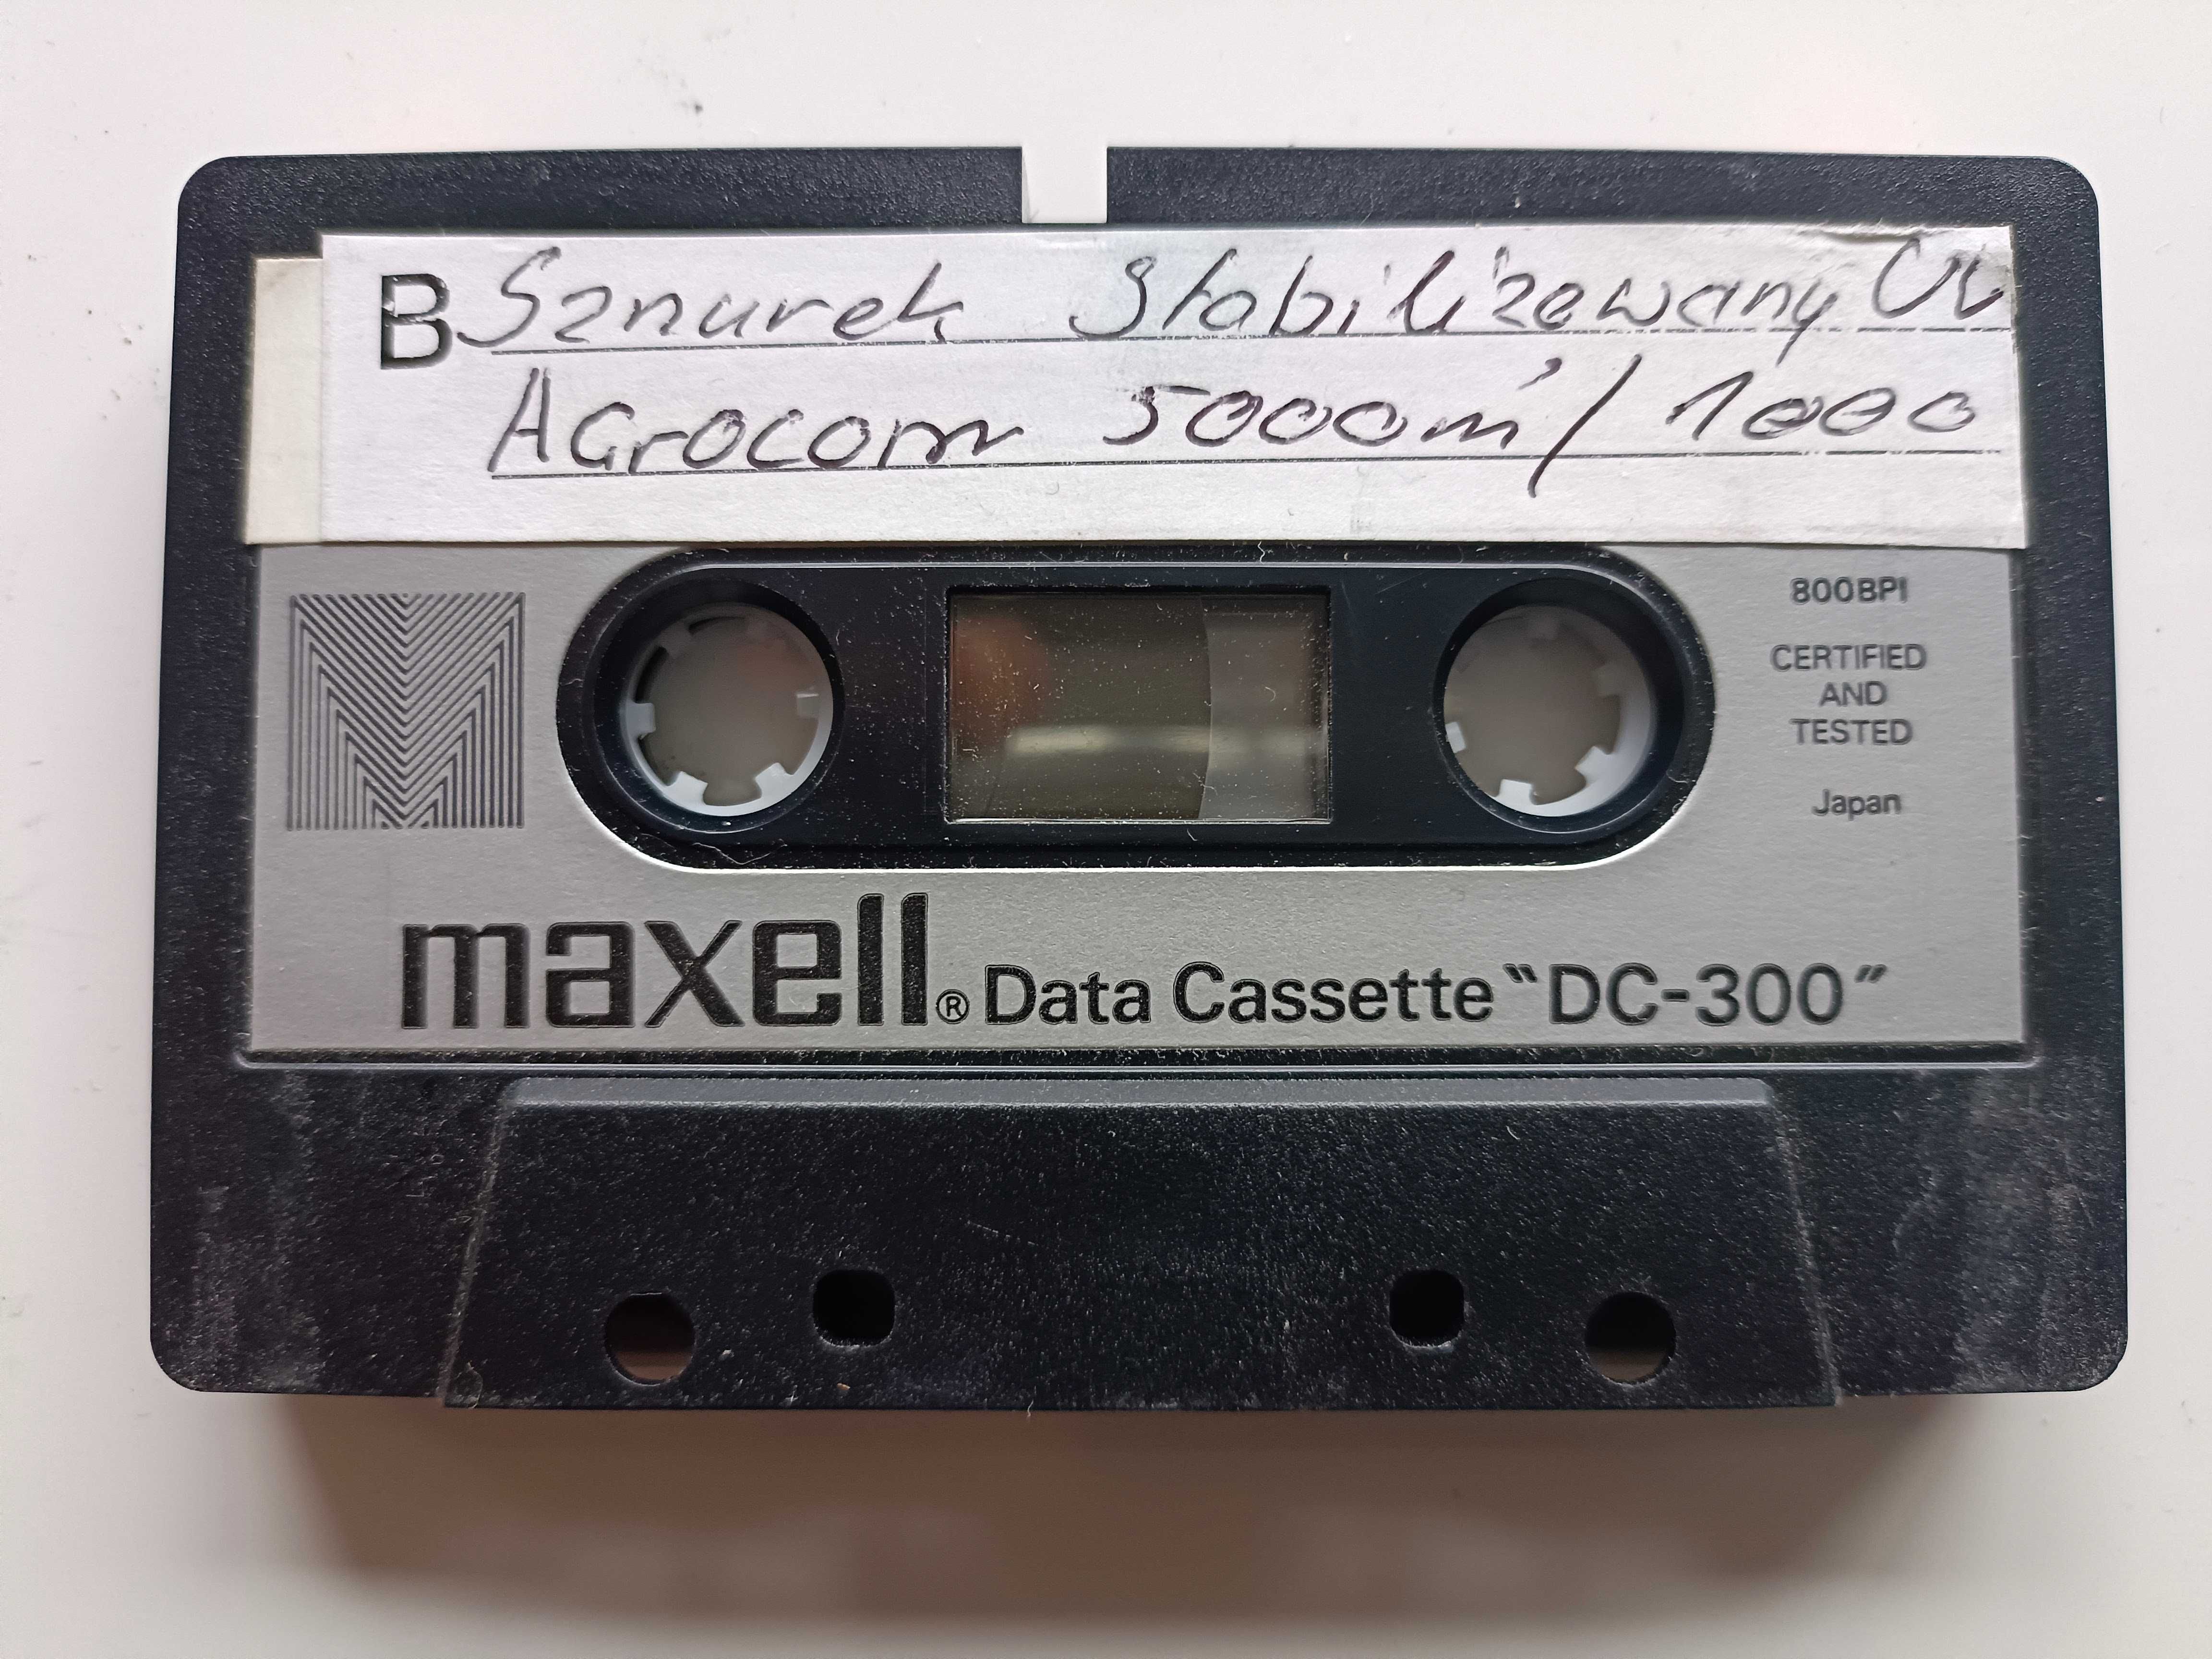 BASF Kaseta Compusette II oraz MAXELL Data Casette